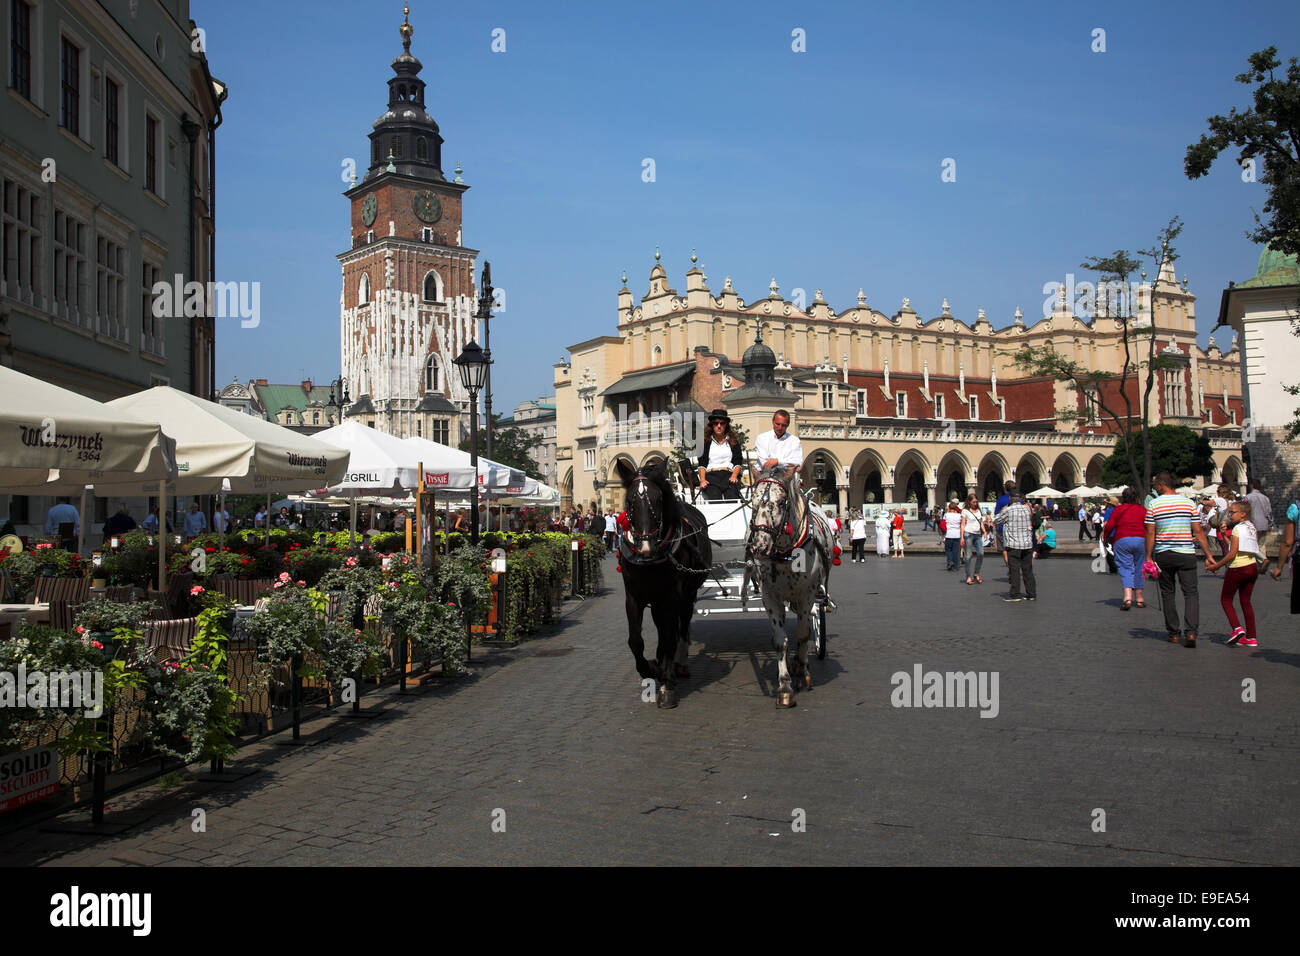 Main Market Square, Kraków Stock Photo